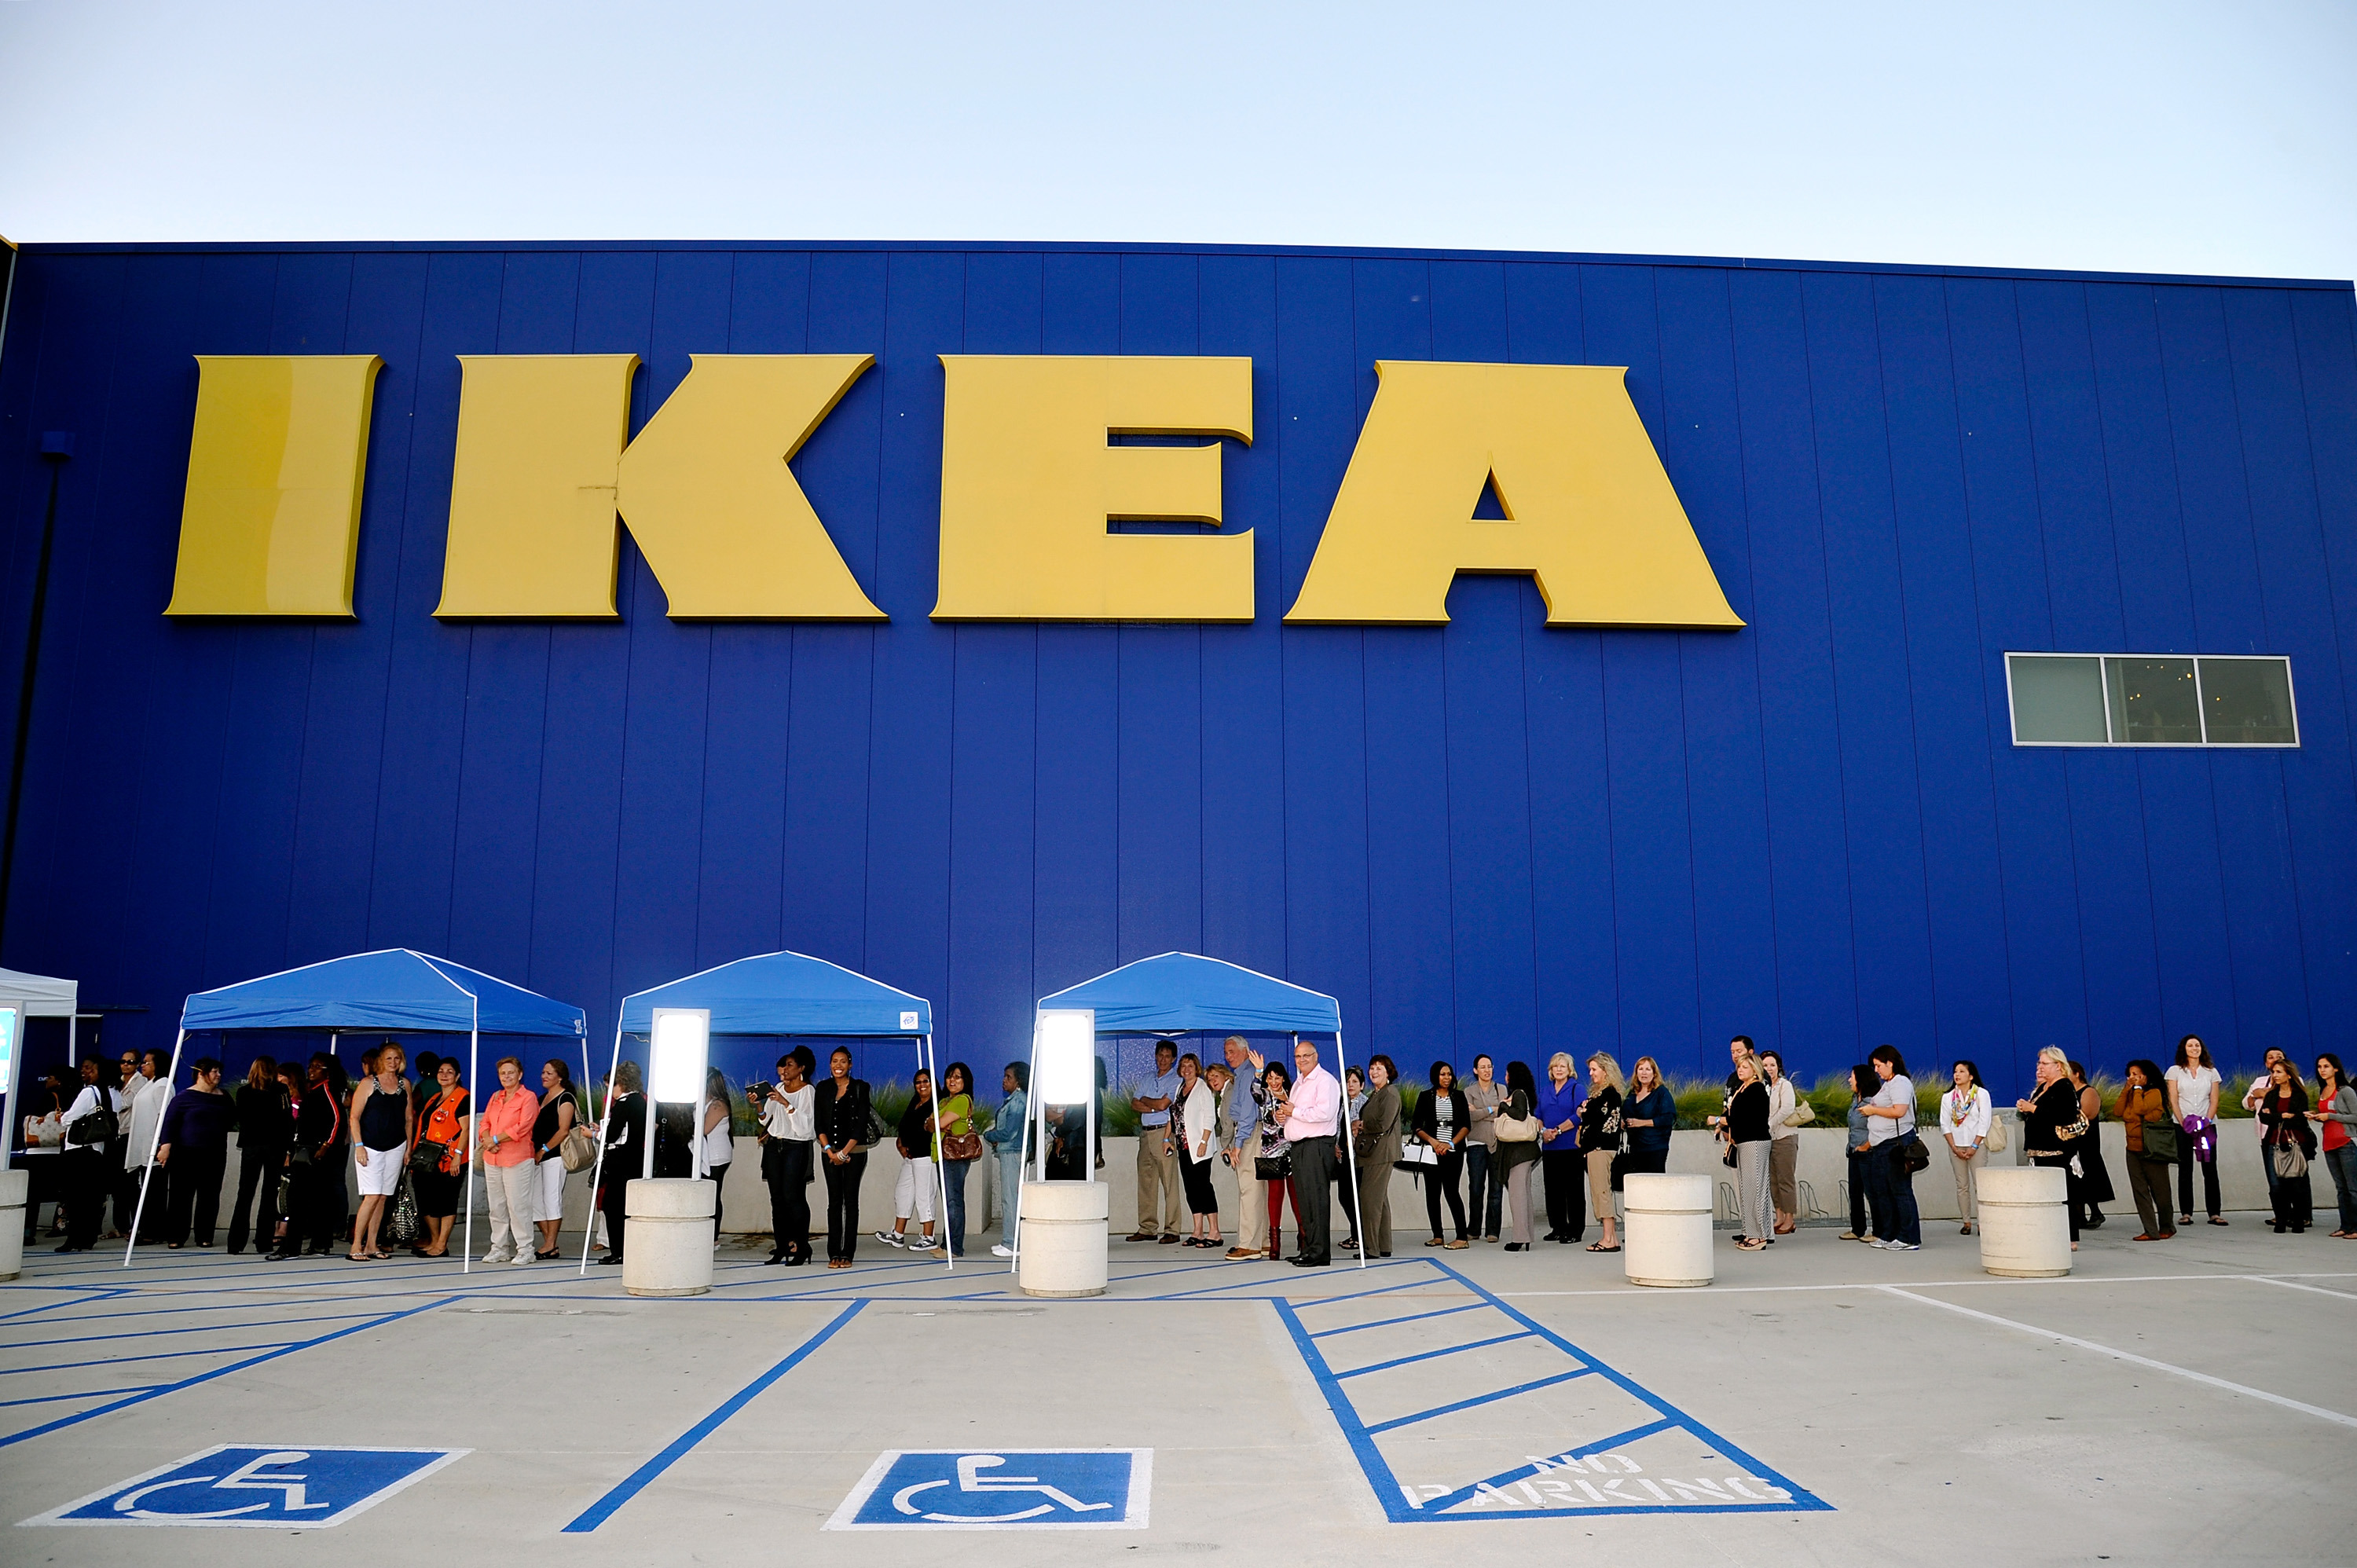 An Ikea store in Covina, Calif. (John Sciulli&mdash;2012 Getty Images)